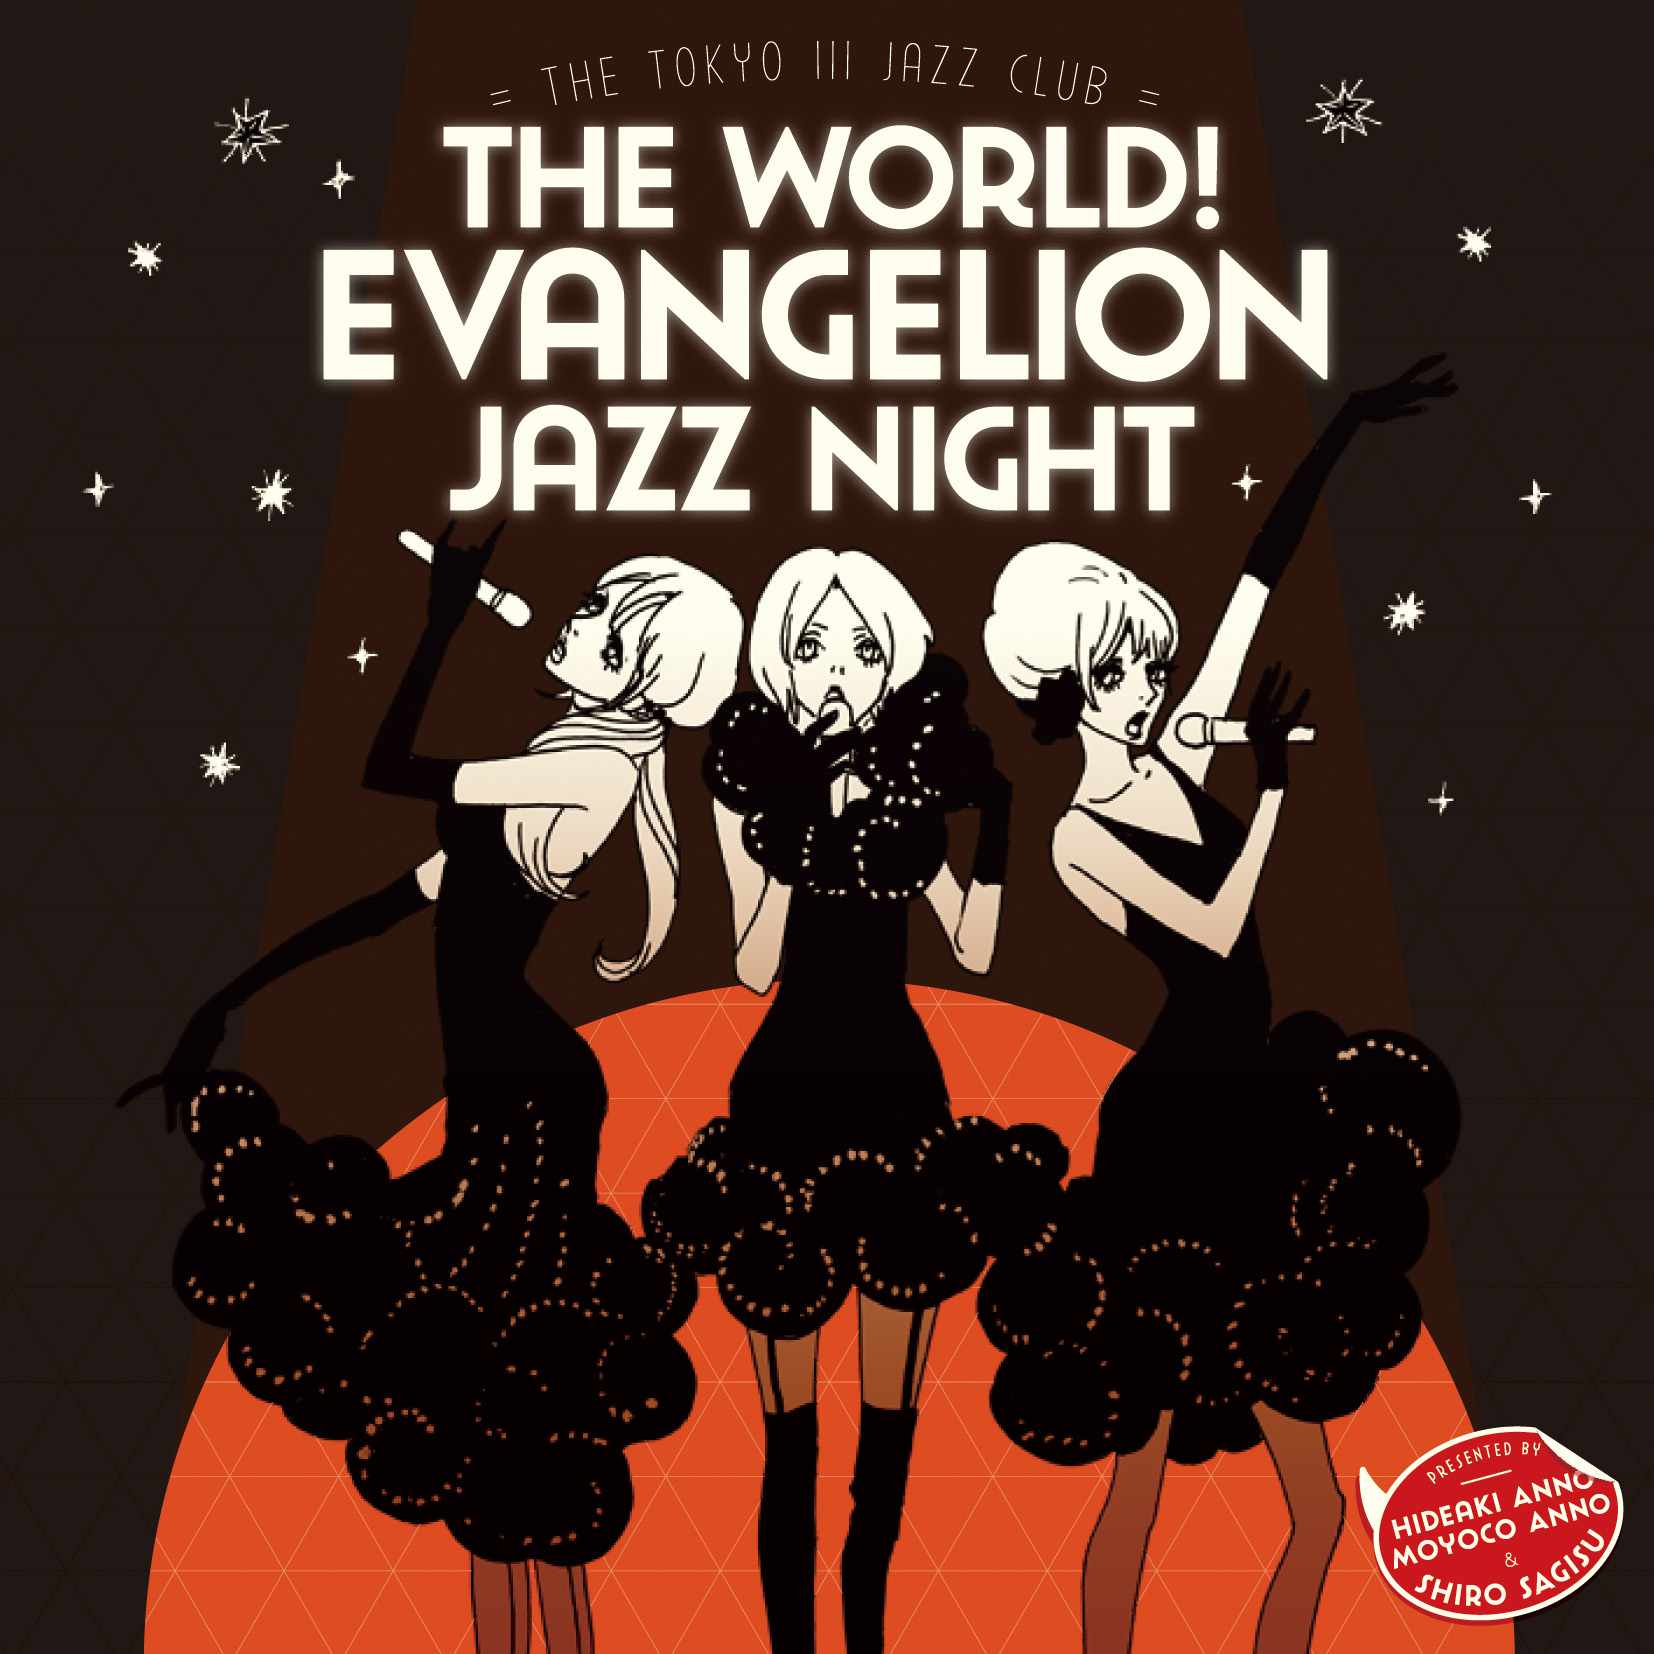 Eva音楽のjazzアレンジアルバム The World Evangelion Jazz Night The Tokyo Iii Jazz Club 描き下ろしジャケットイラスト公開 Moyoco Anno